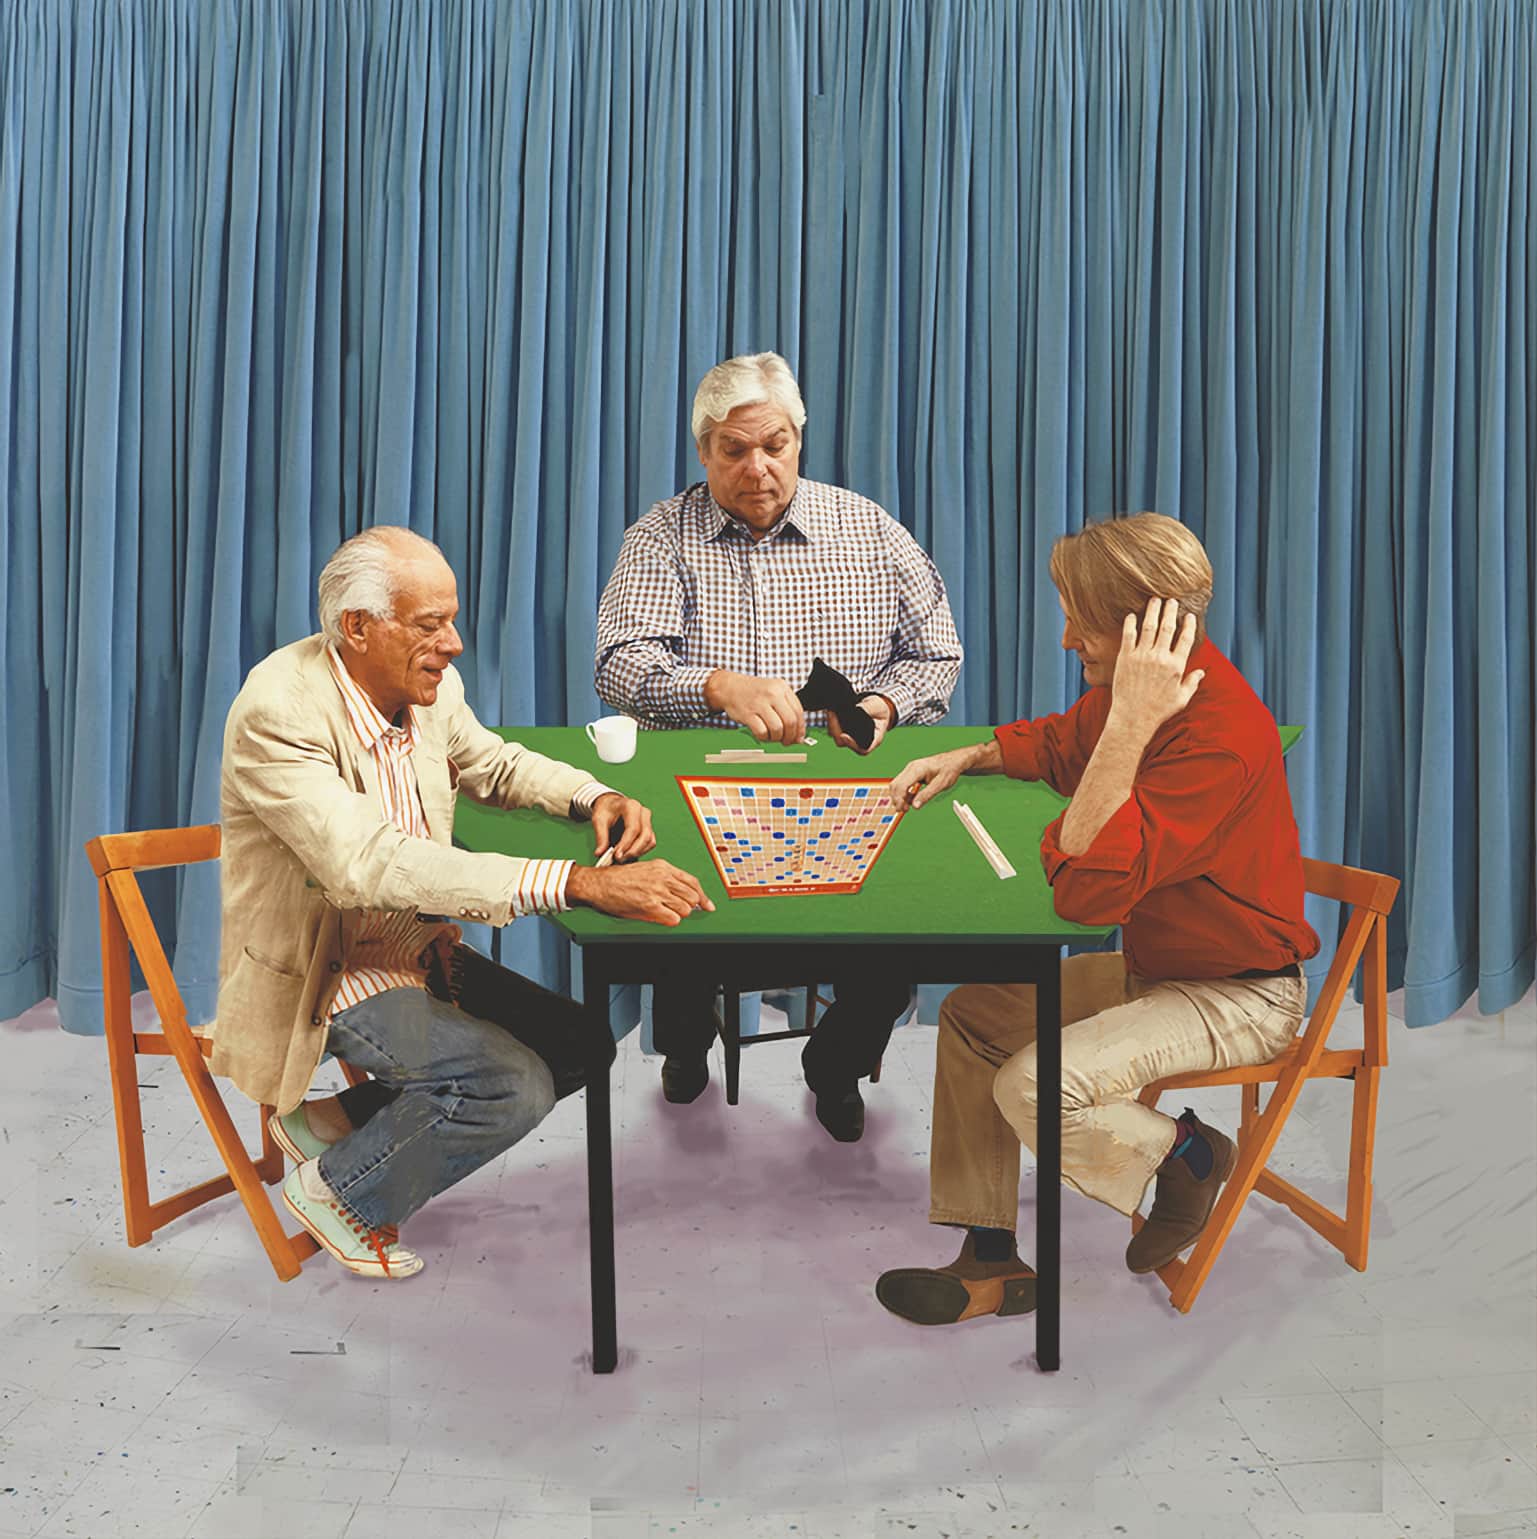 David Hockney - The Scrabble Players